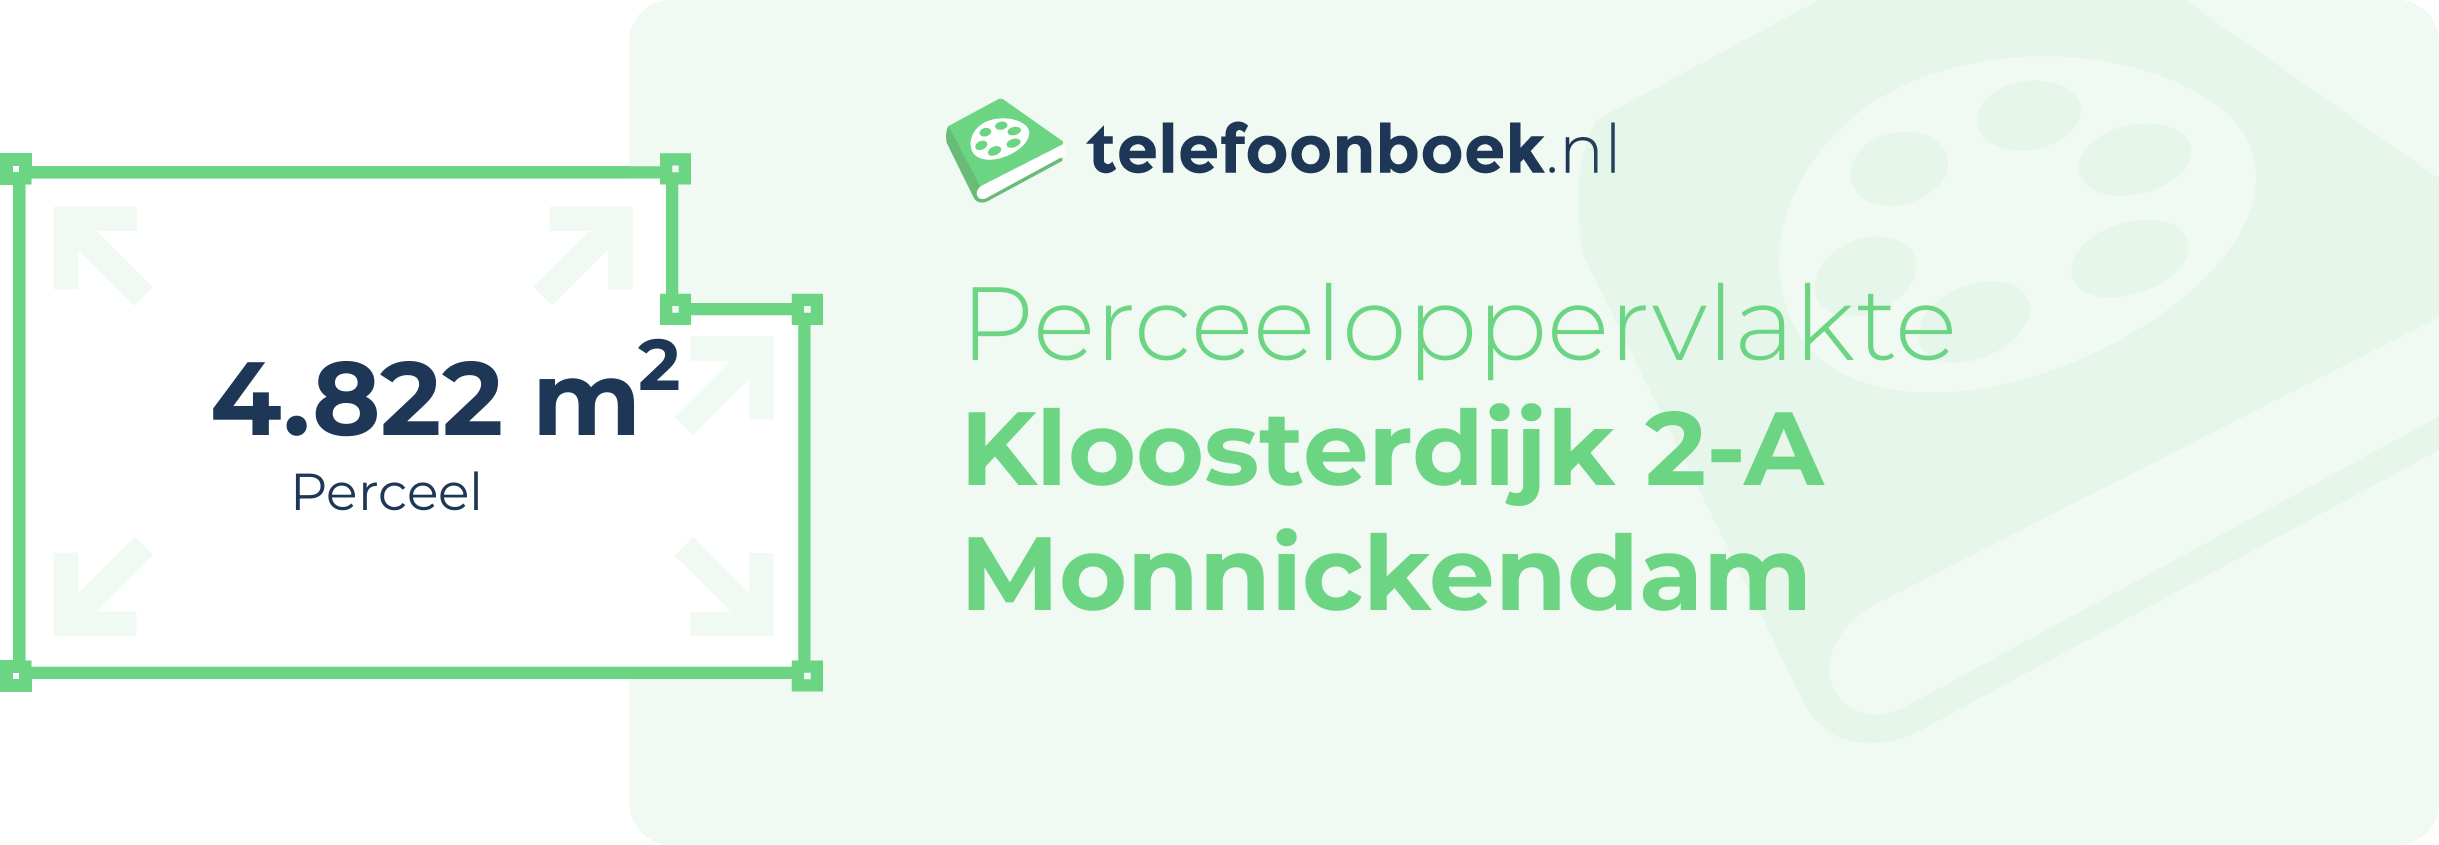 Perceeloppervlakte Kloosterdijk 2-A Monnickendam